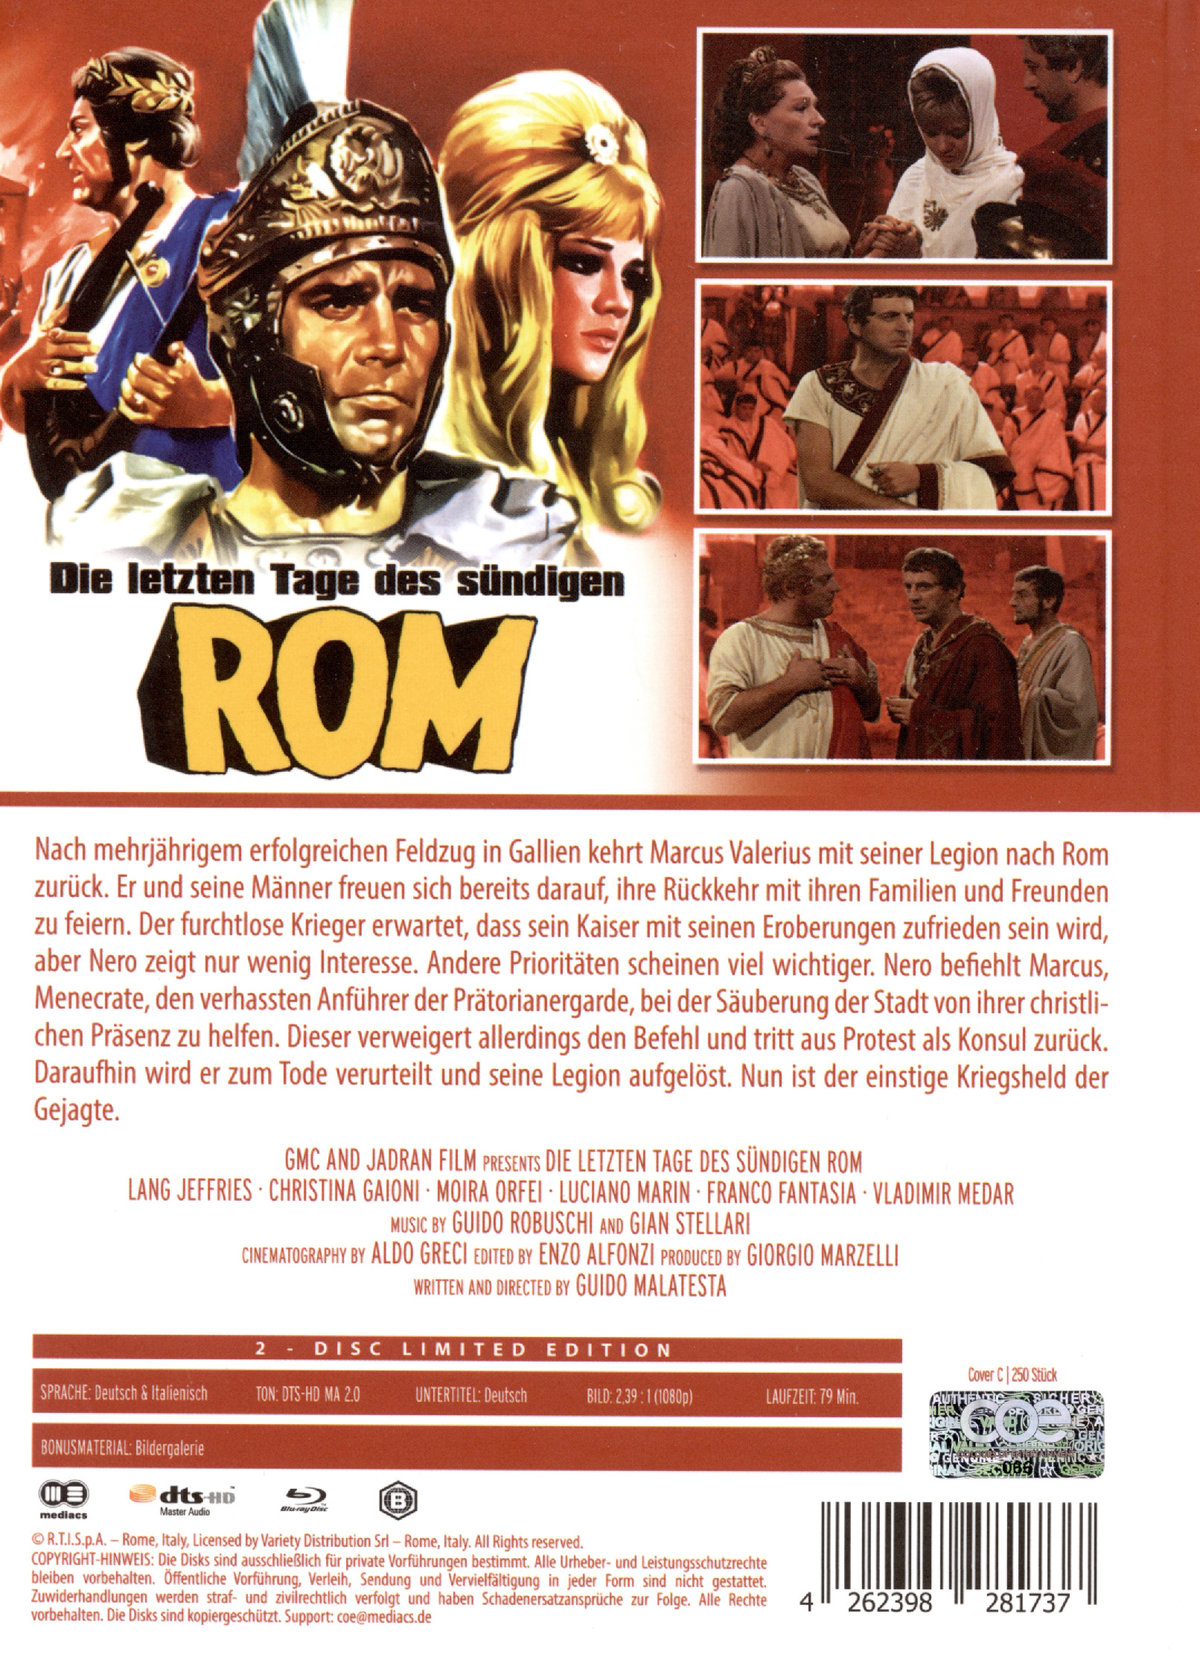 Letzten Tage des sündigen Rom, Die - Uncut Mediabook Edition (DVD+blu-ray) (C)